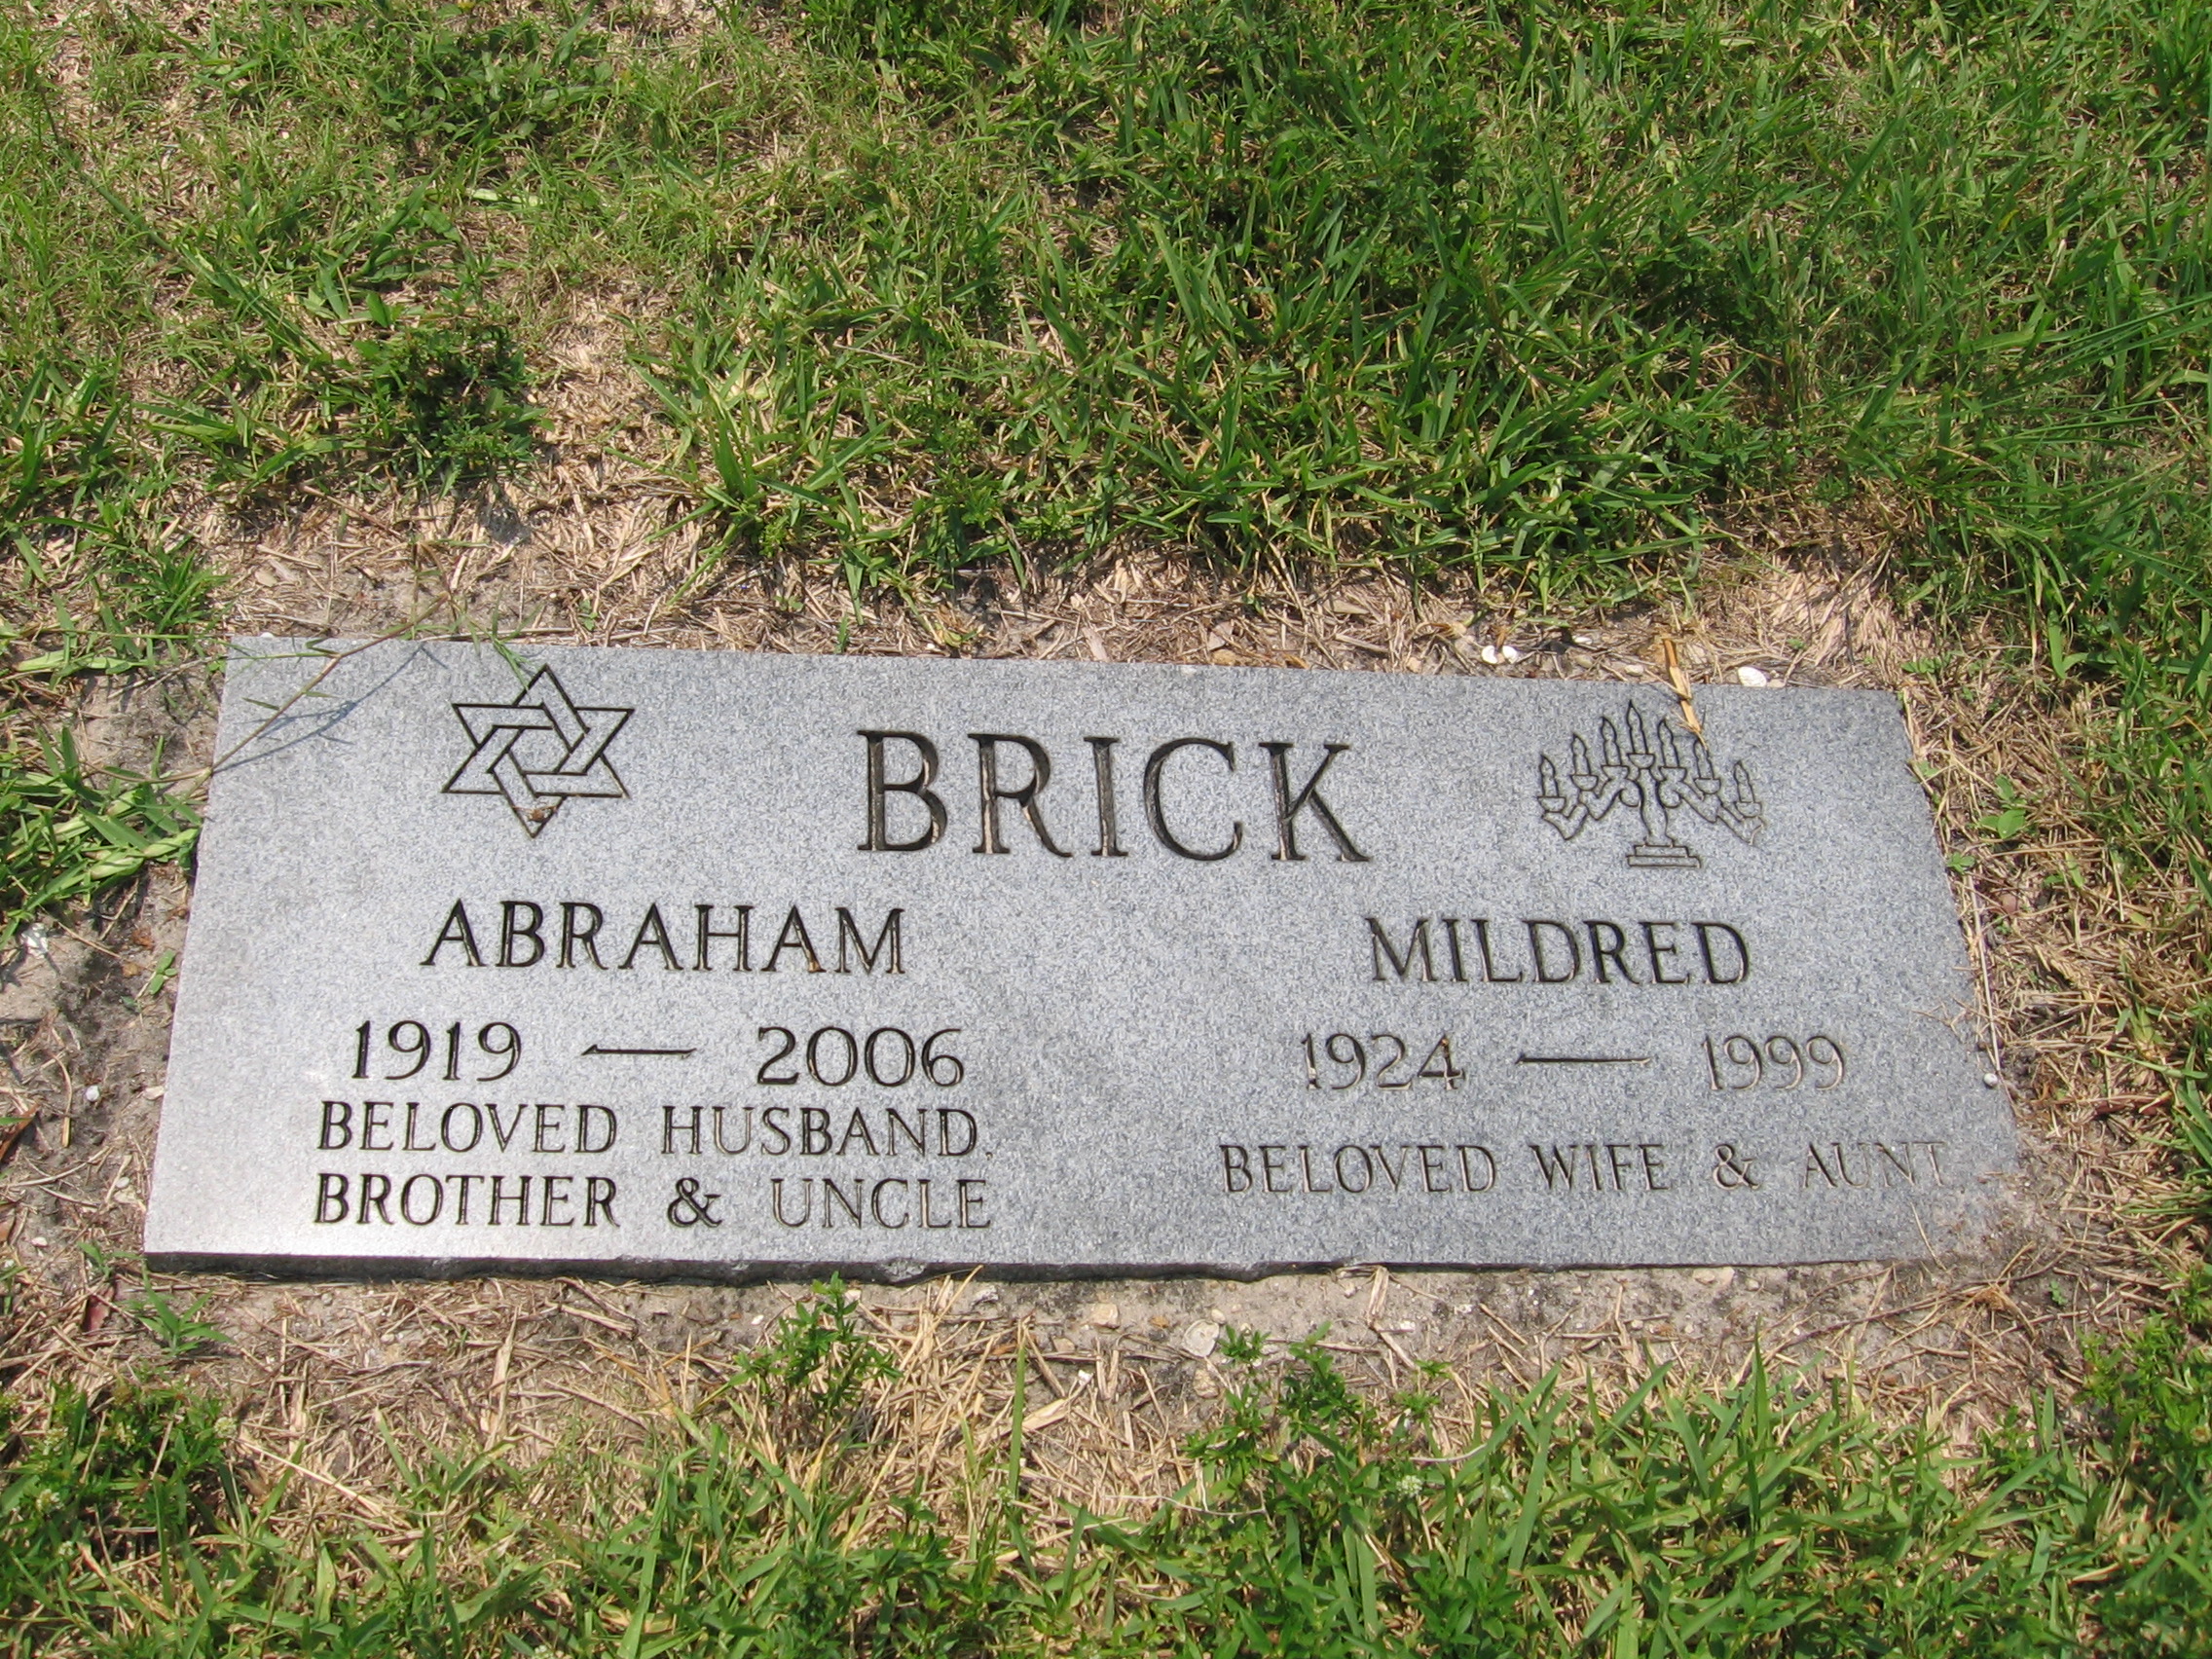 Abraham Brick